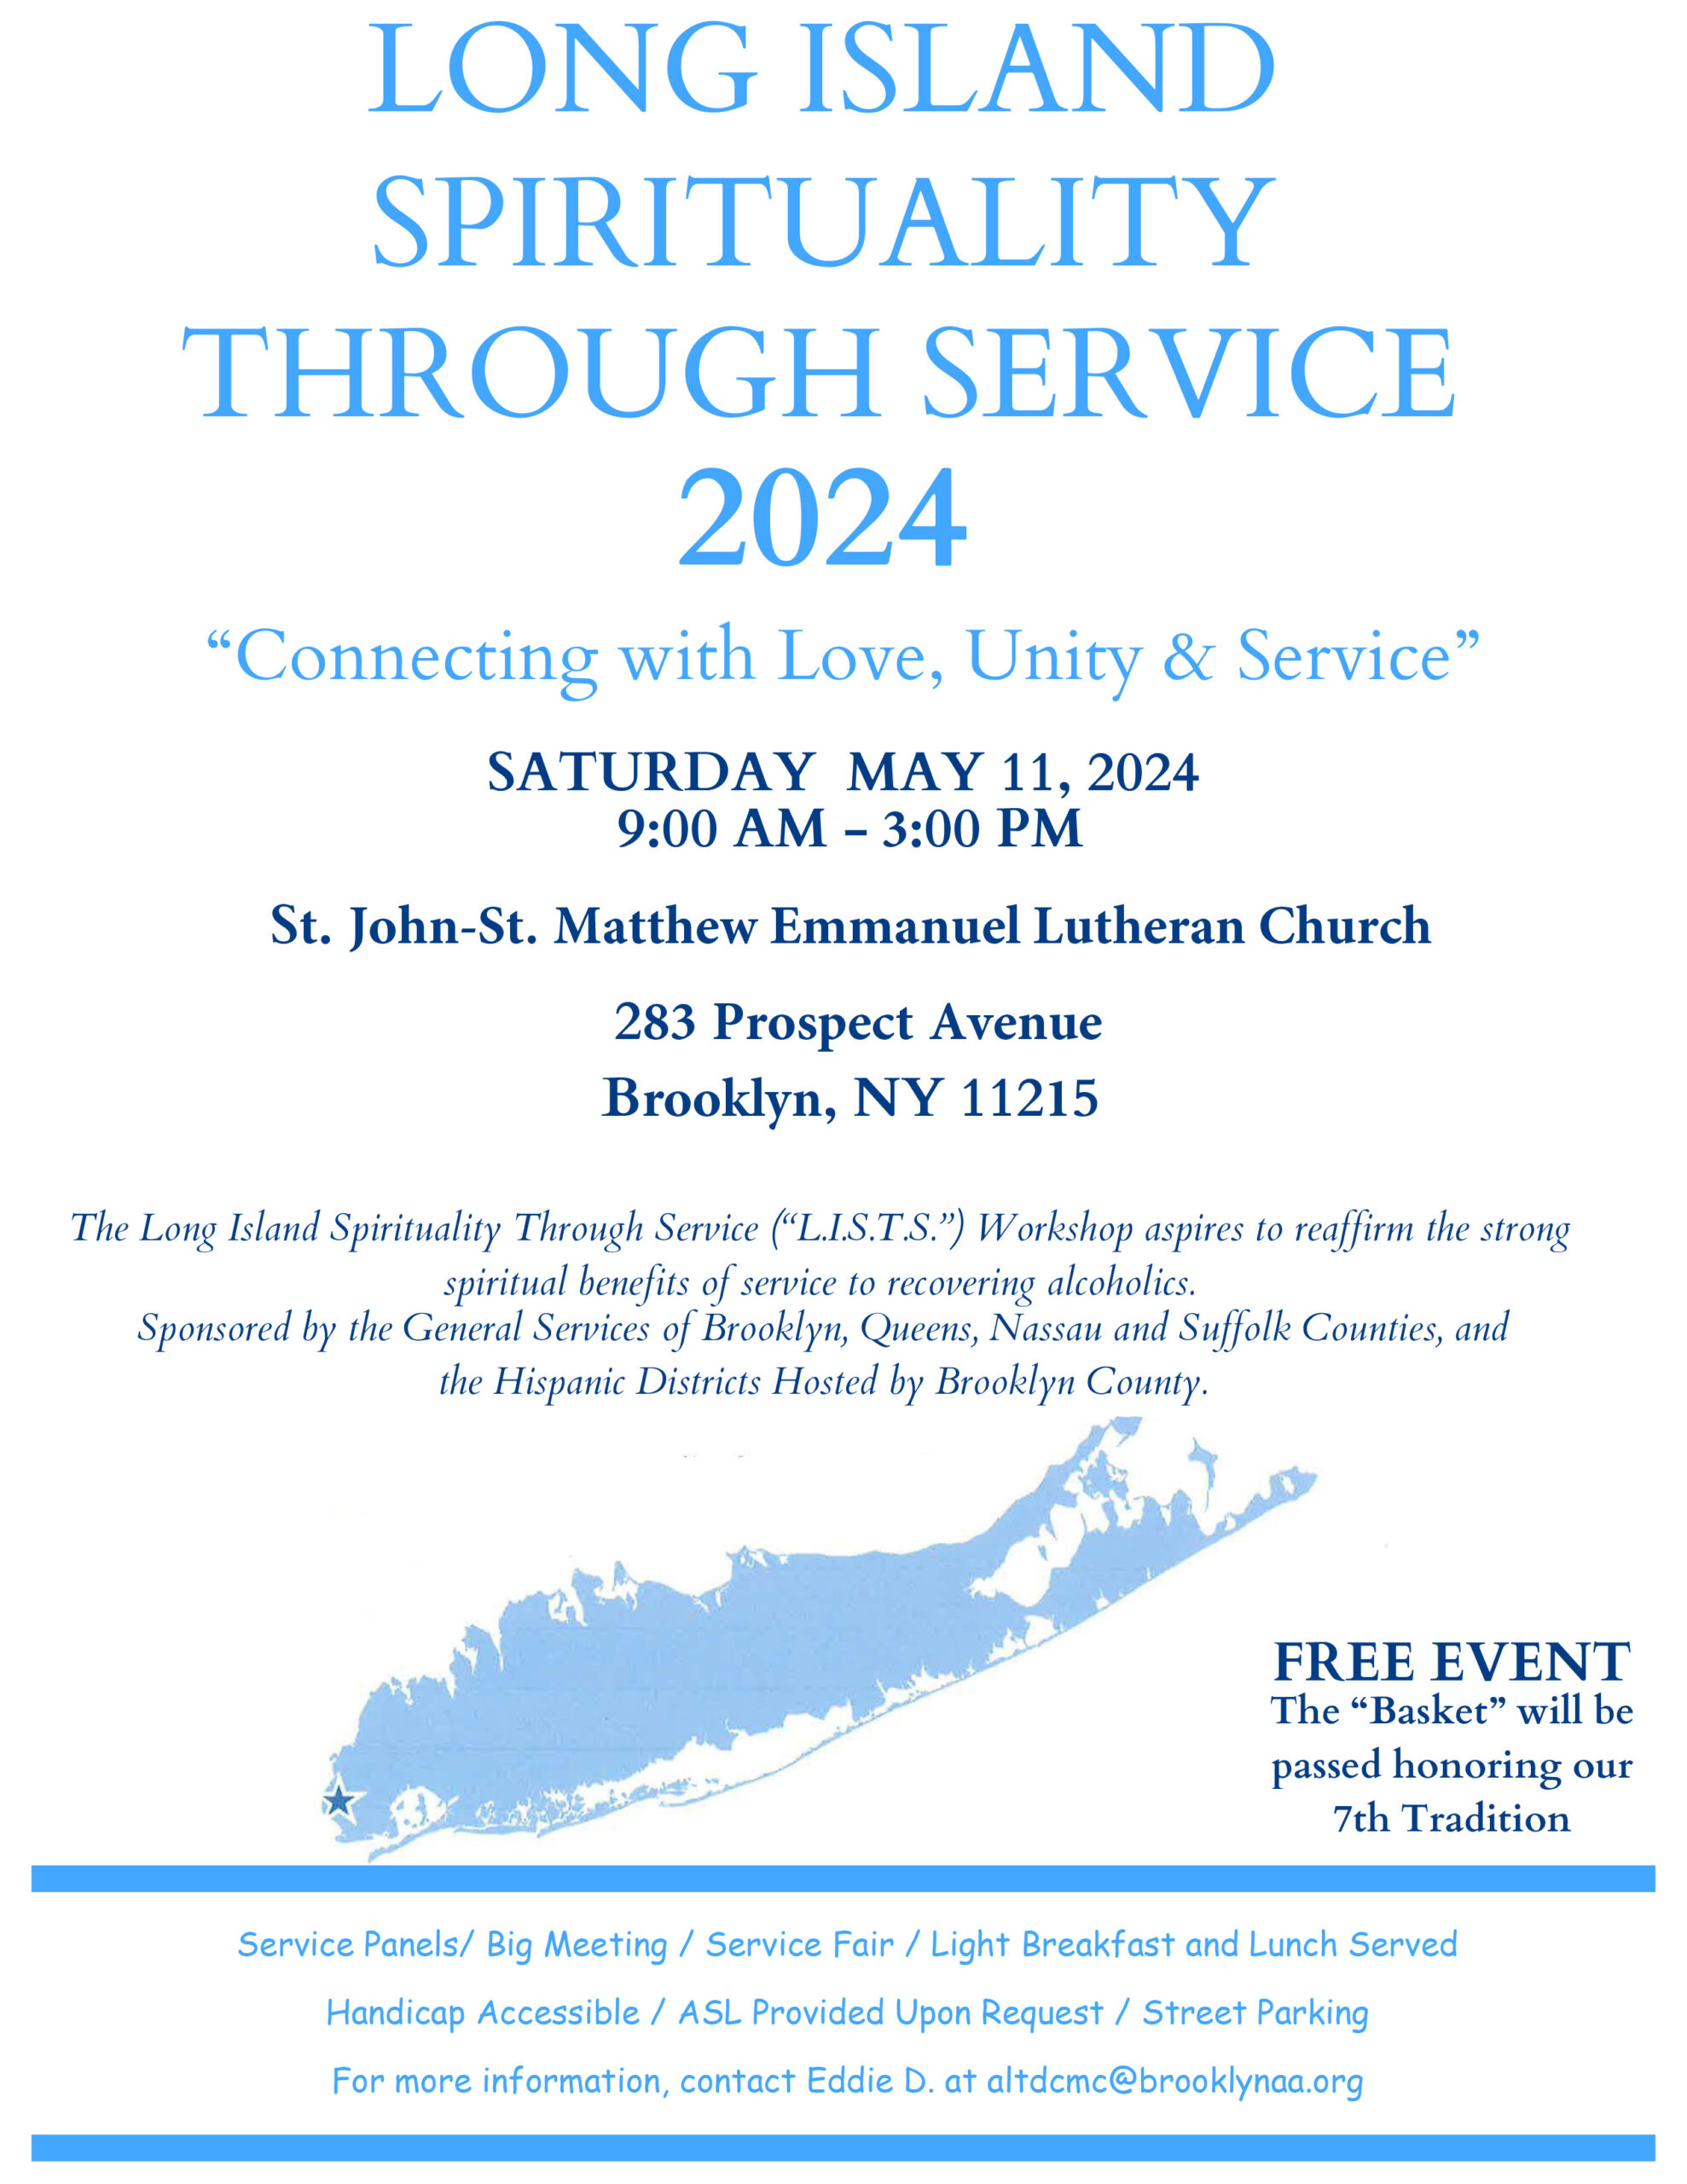 Long Island Spirituality Through Service (L.I.S.T.S.) Workshop @ St. John-St. Matthew Emmanuel Lutheran Church